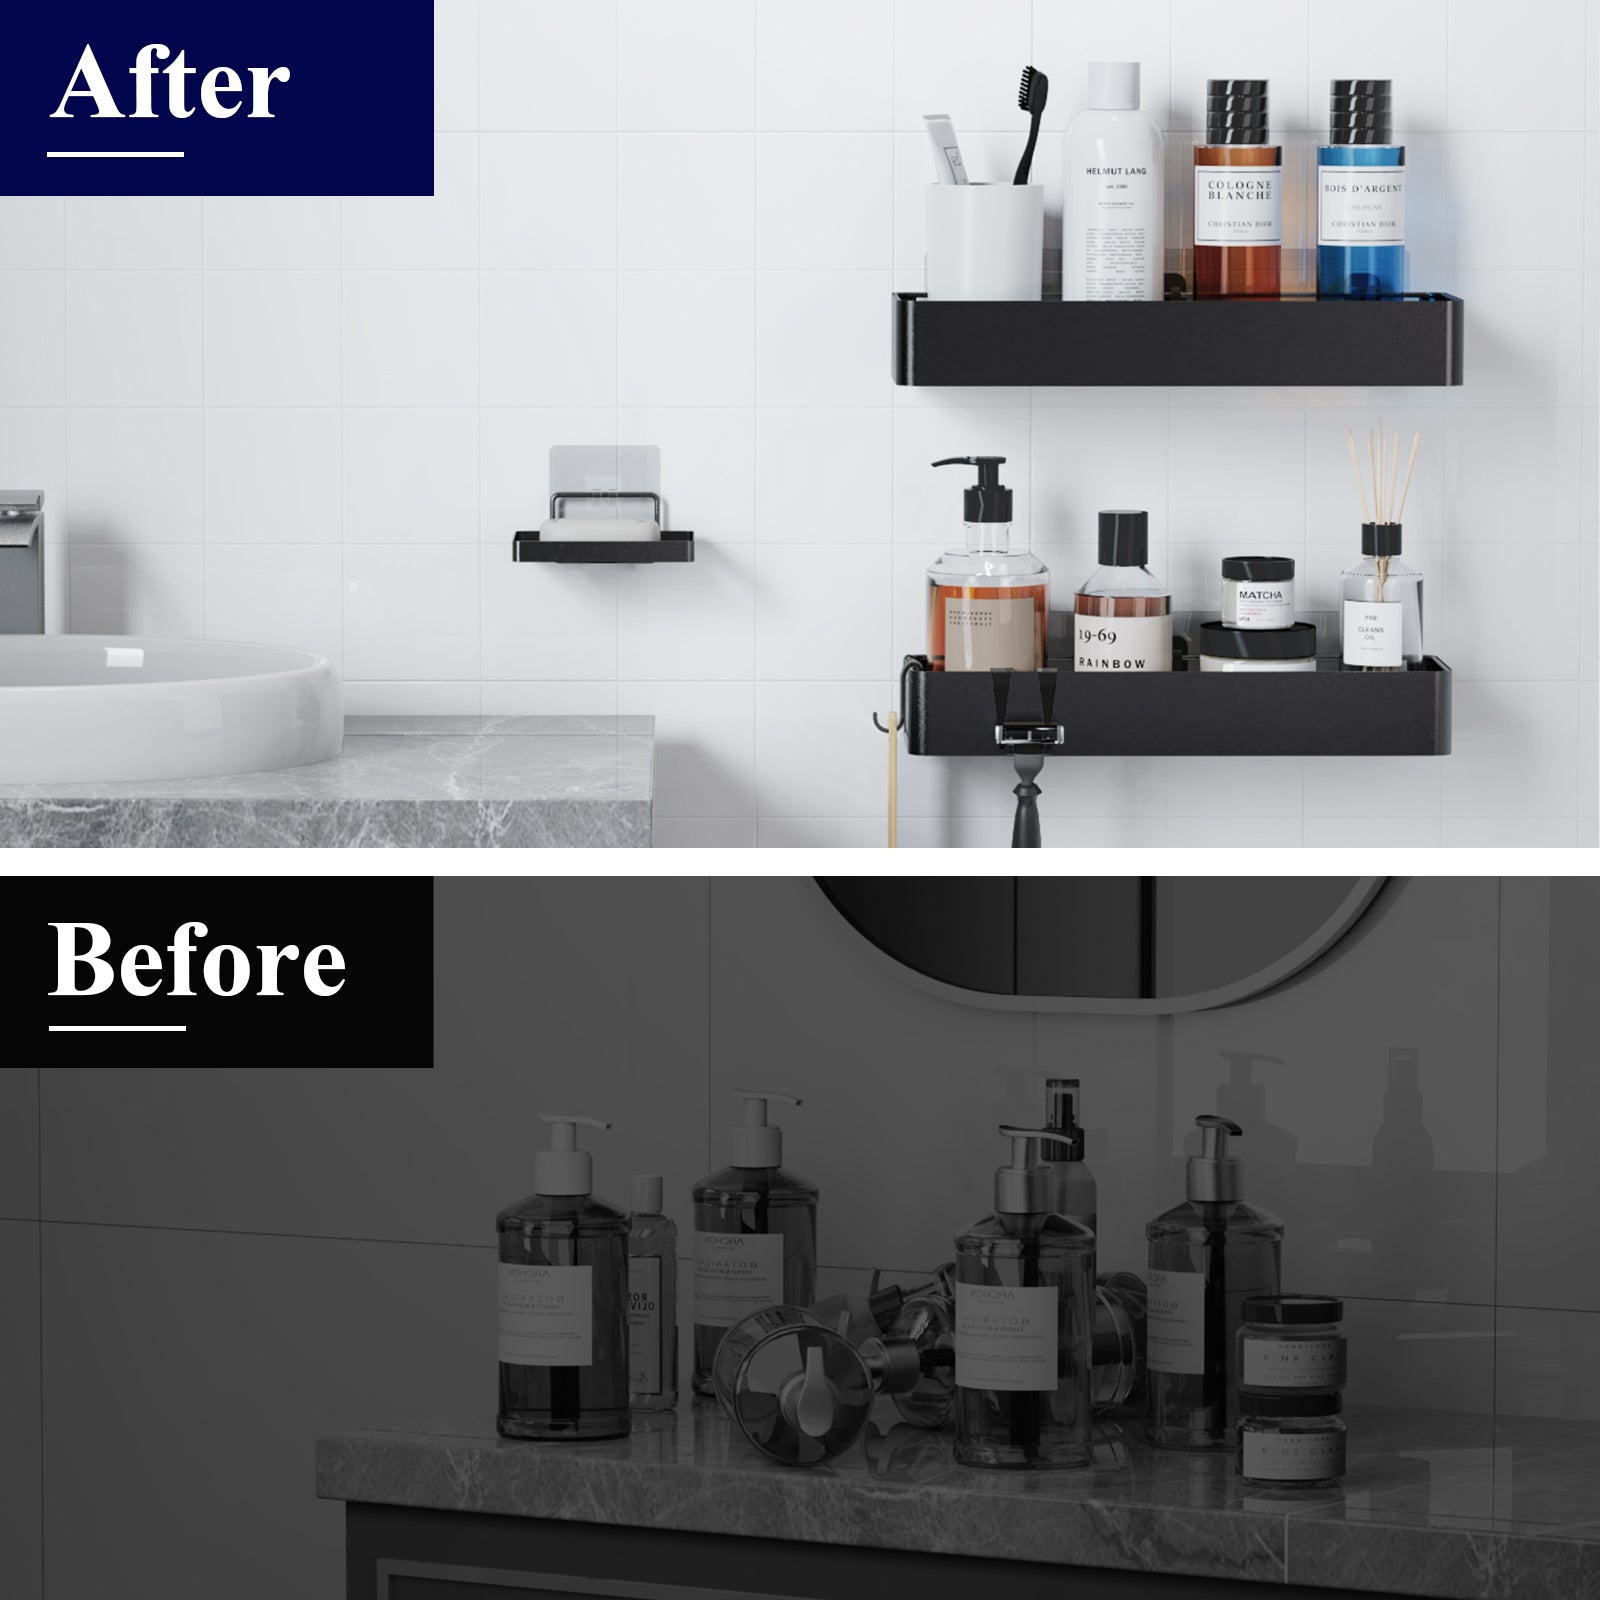 bathroom-shower-shelves - Harrell Design + Build